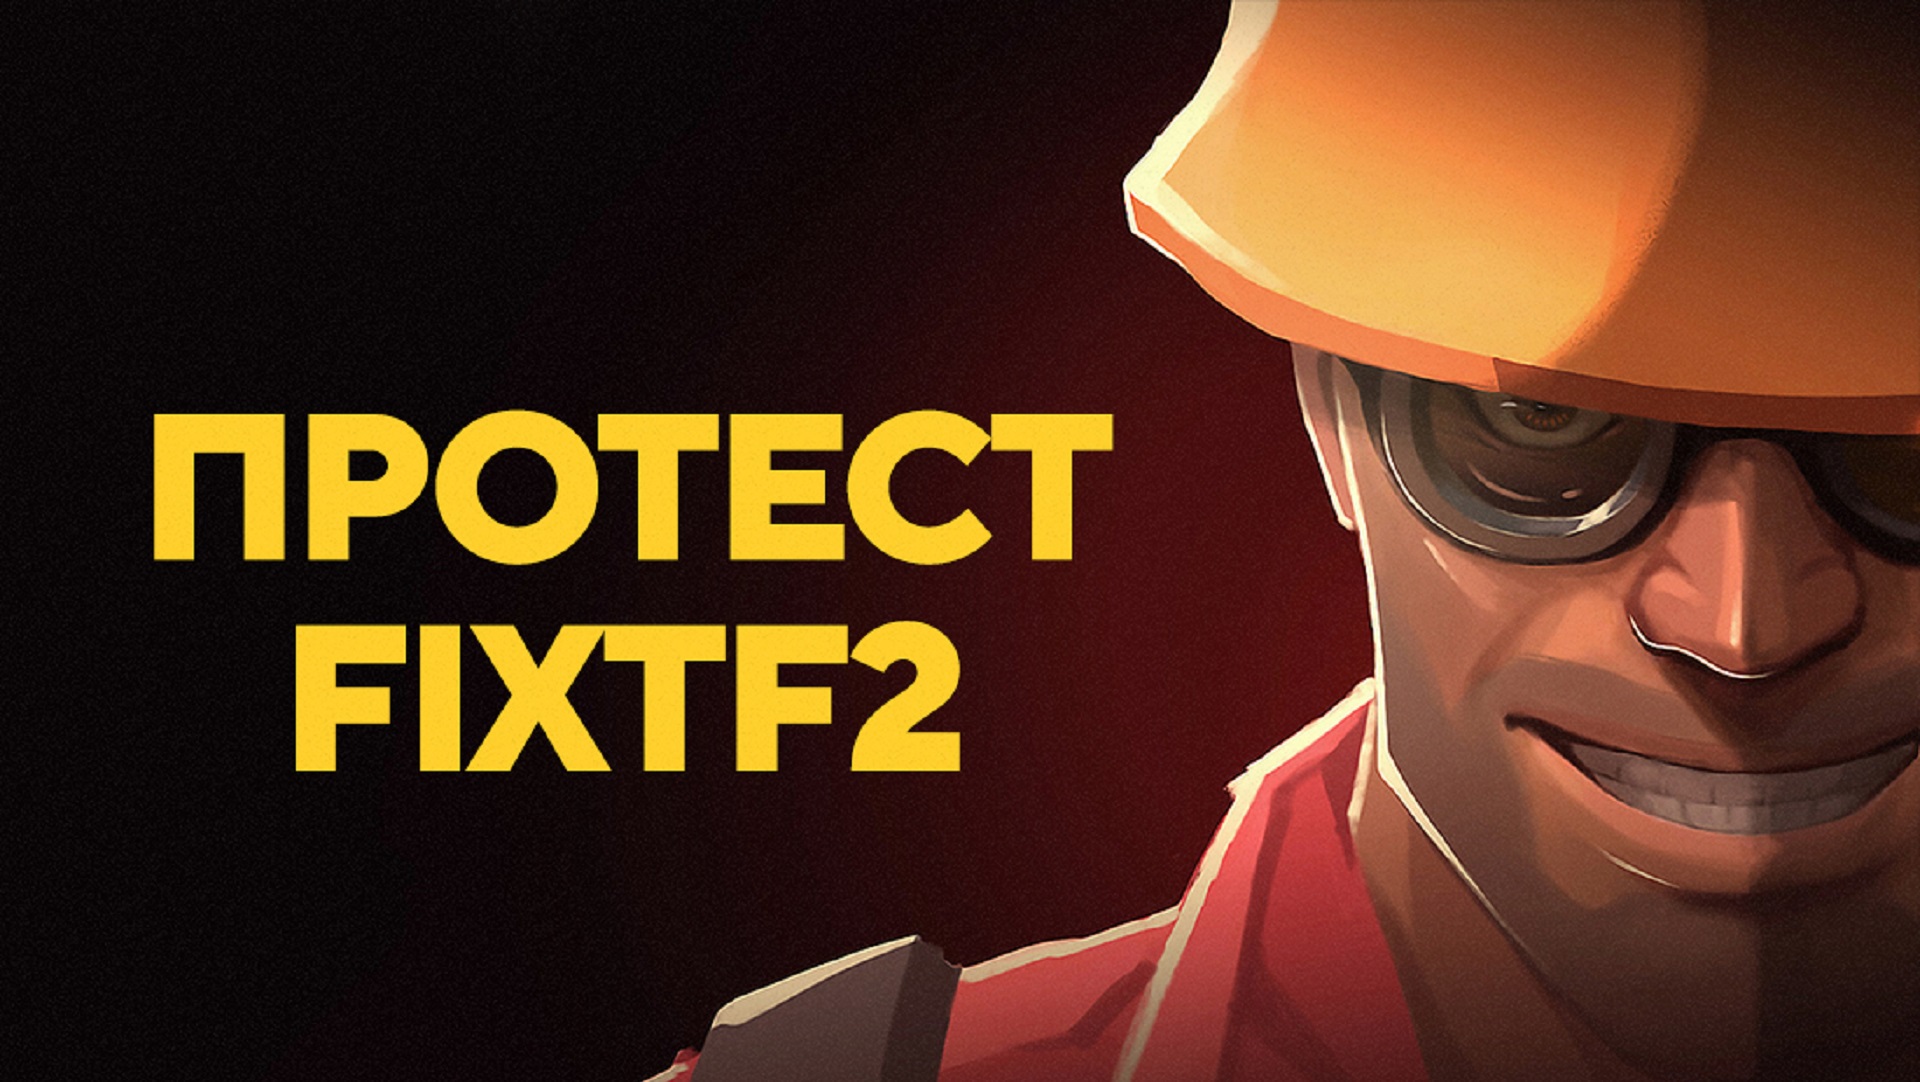 Протест FixTF2. Игроки громят Valve за равнодушие к будущему Team Fortress 2